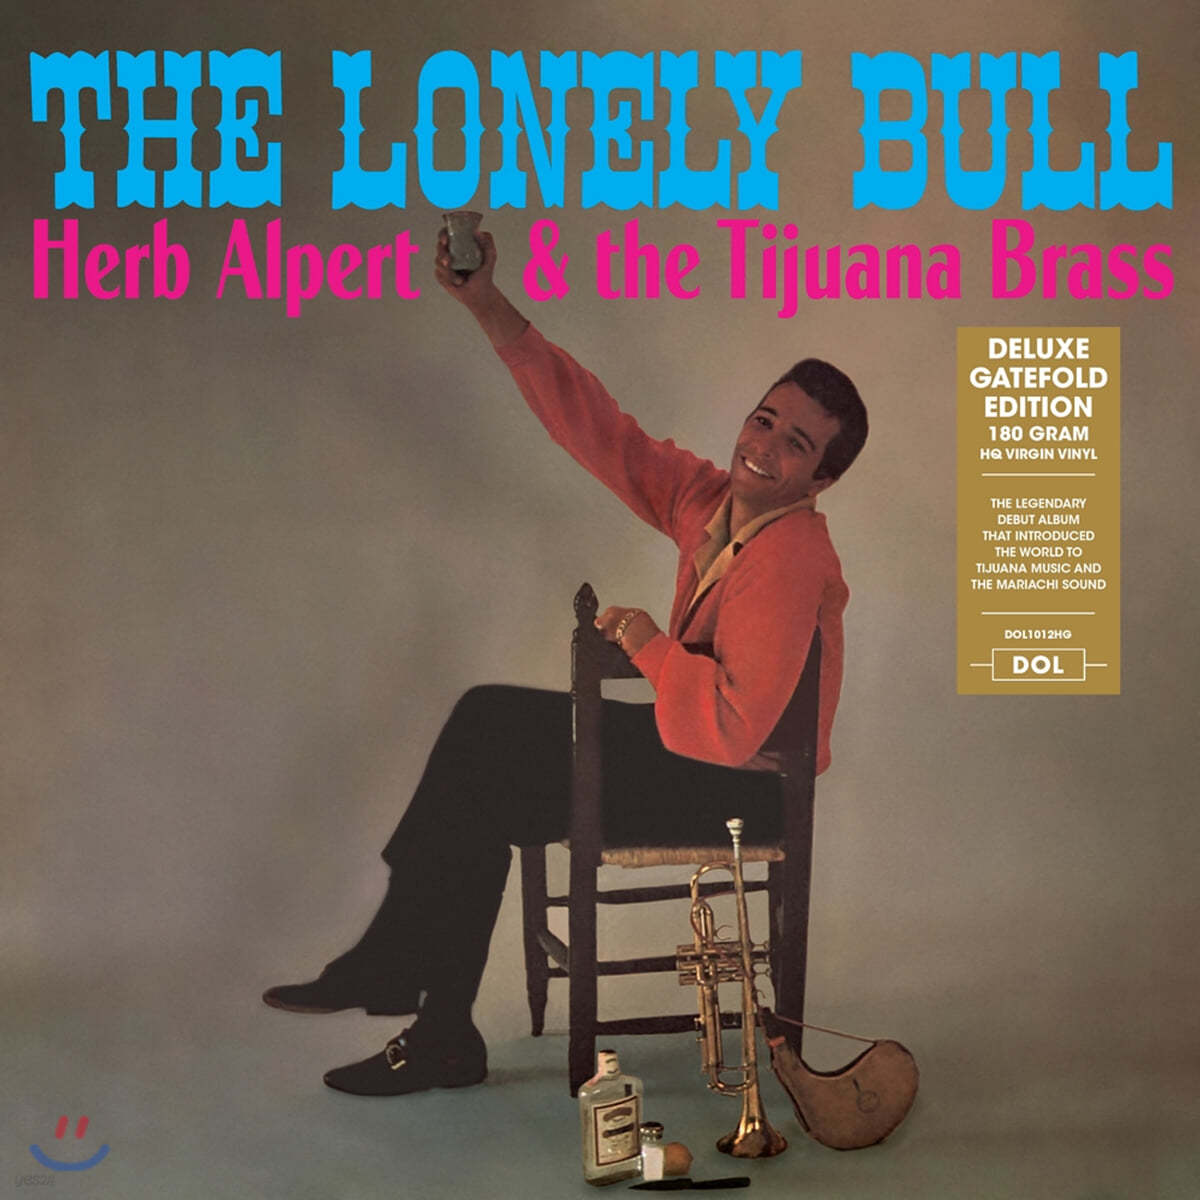 Herb Alpert / The Tijuana Brass (허브 앨퍼트, 티후아나 브라스) - The Lonely Bull [LP]